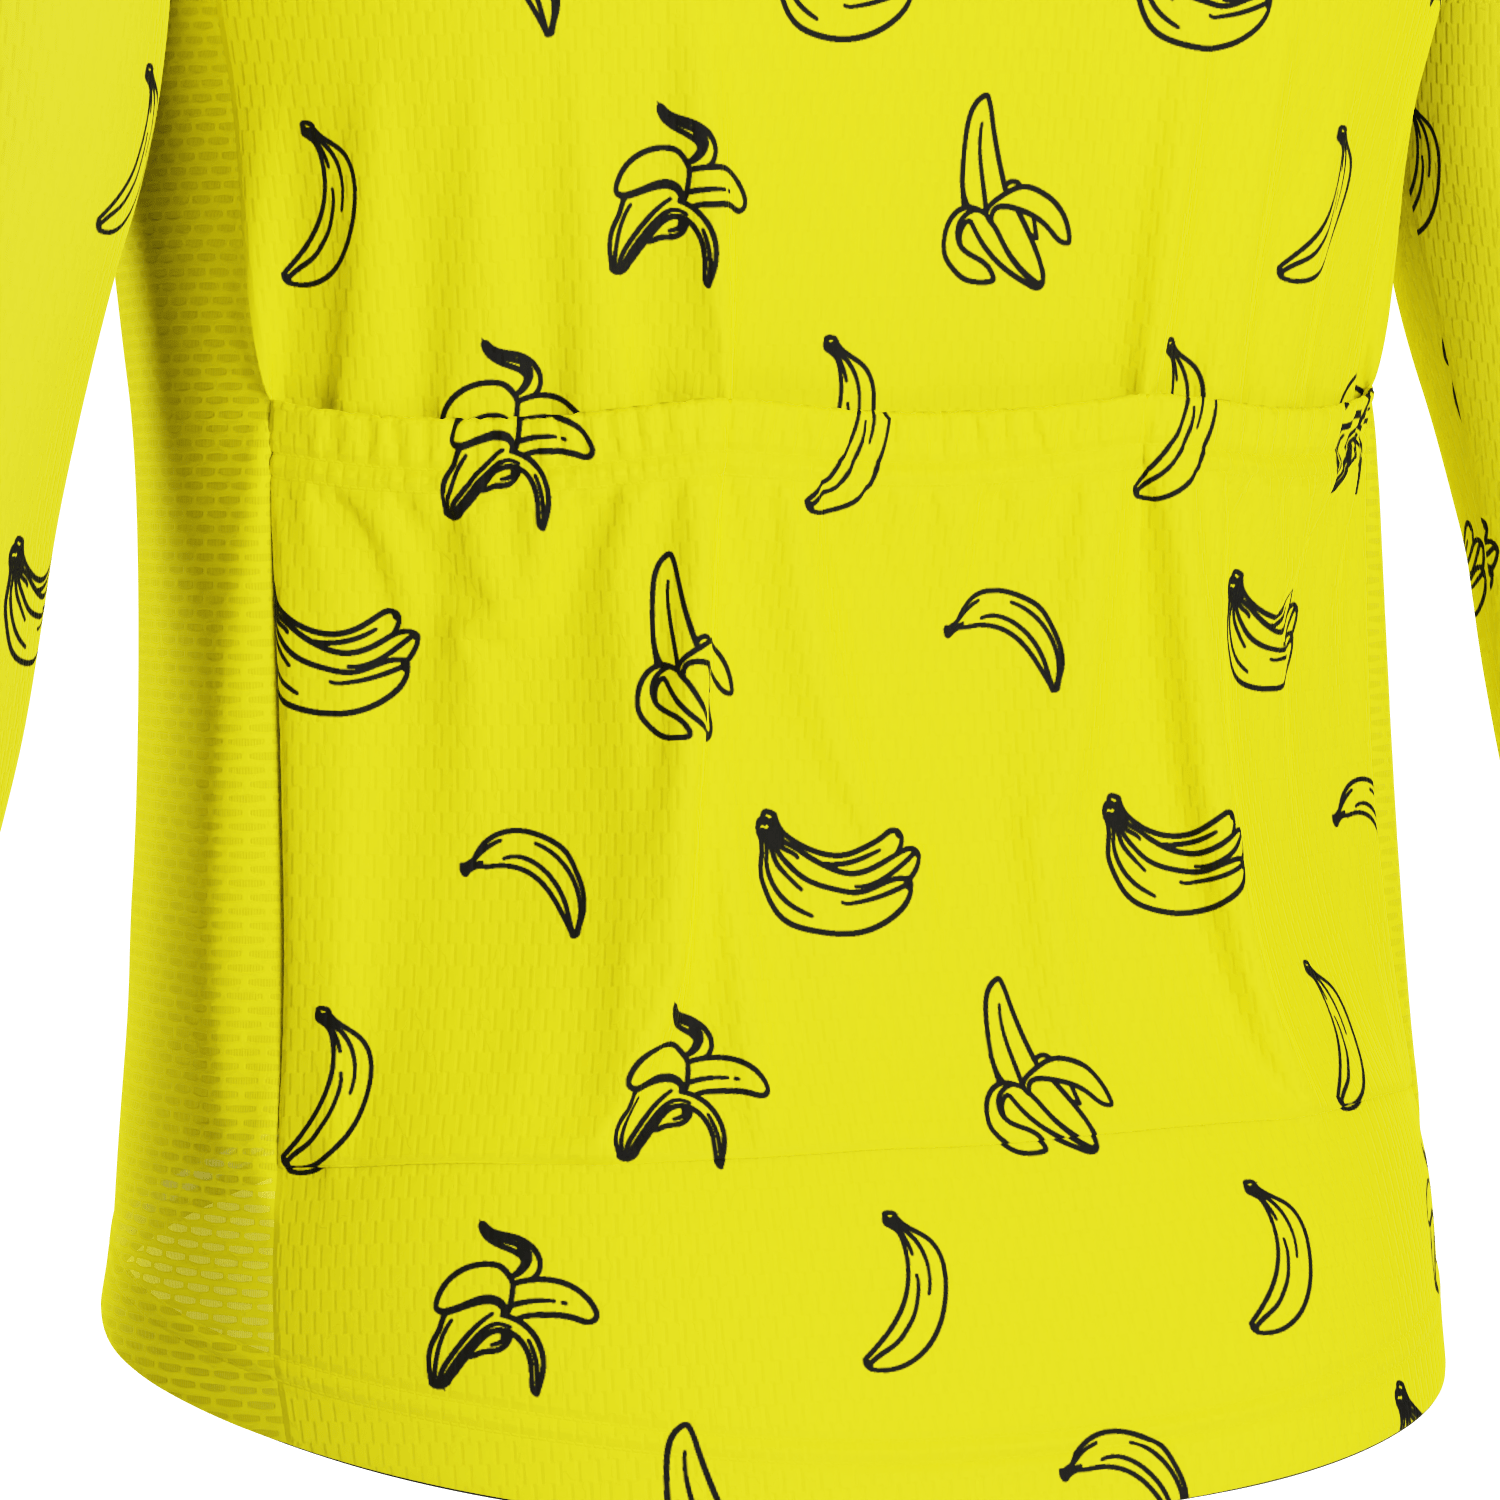 Men's Must Be Bananas Long Sleeve Cycling Jersey